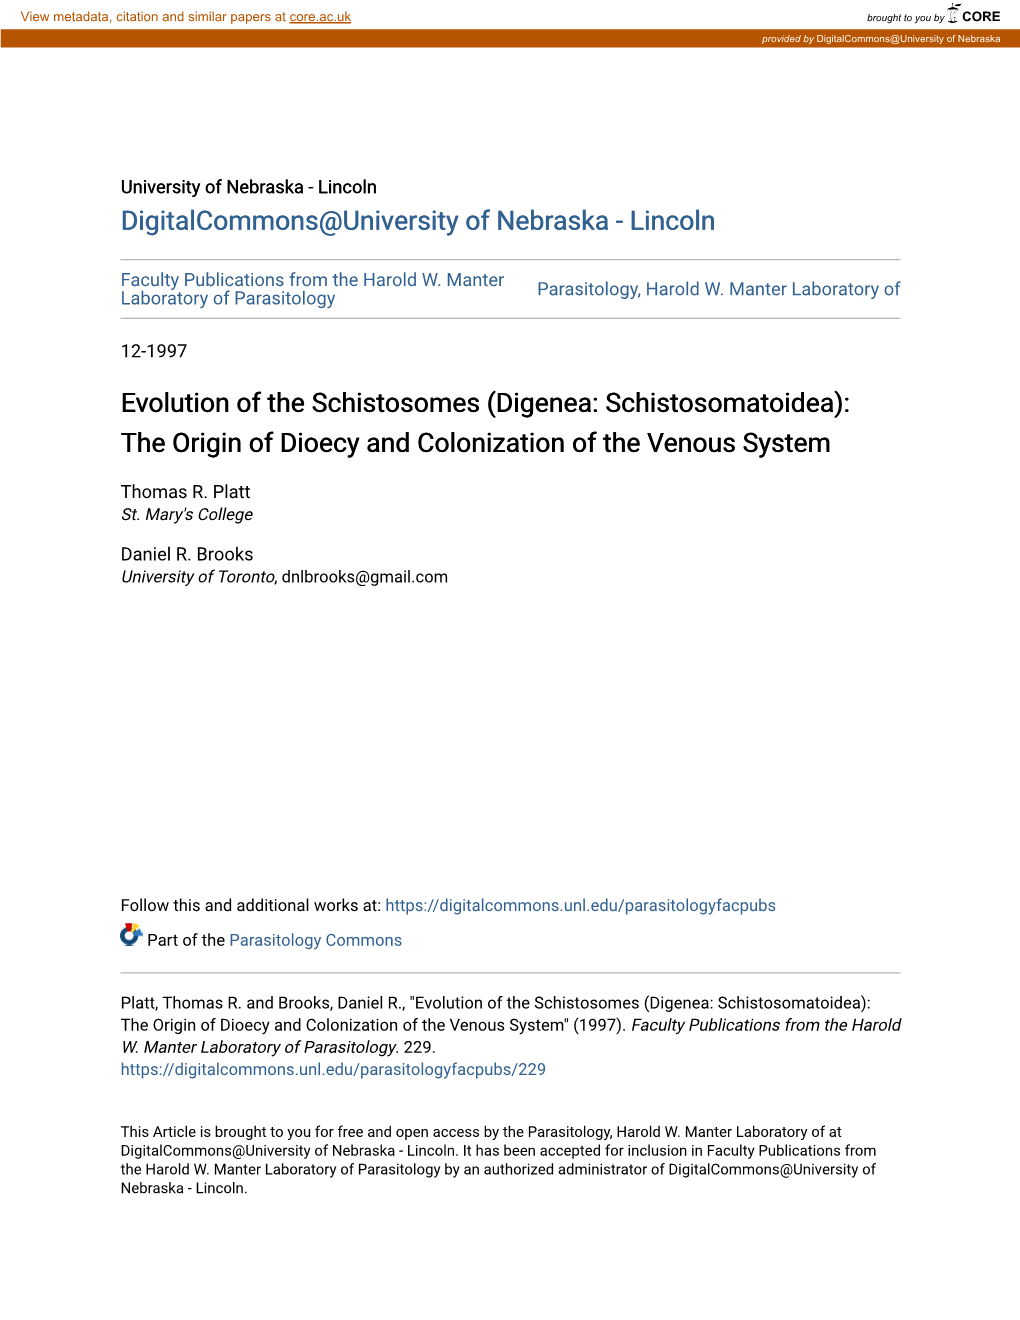 Evolution of the Schistosomes (Digenea: Schistosomatoidea): the Origin of Dioecy and Colonization of the Venous System